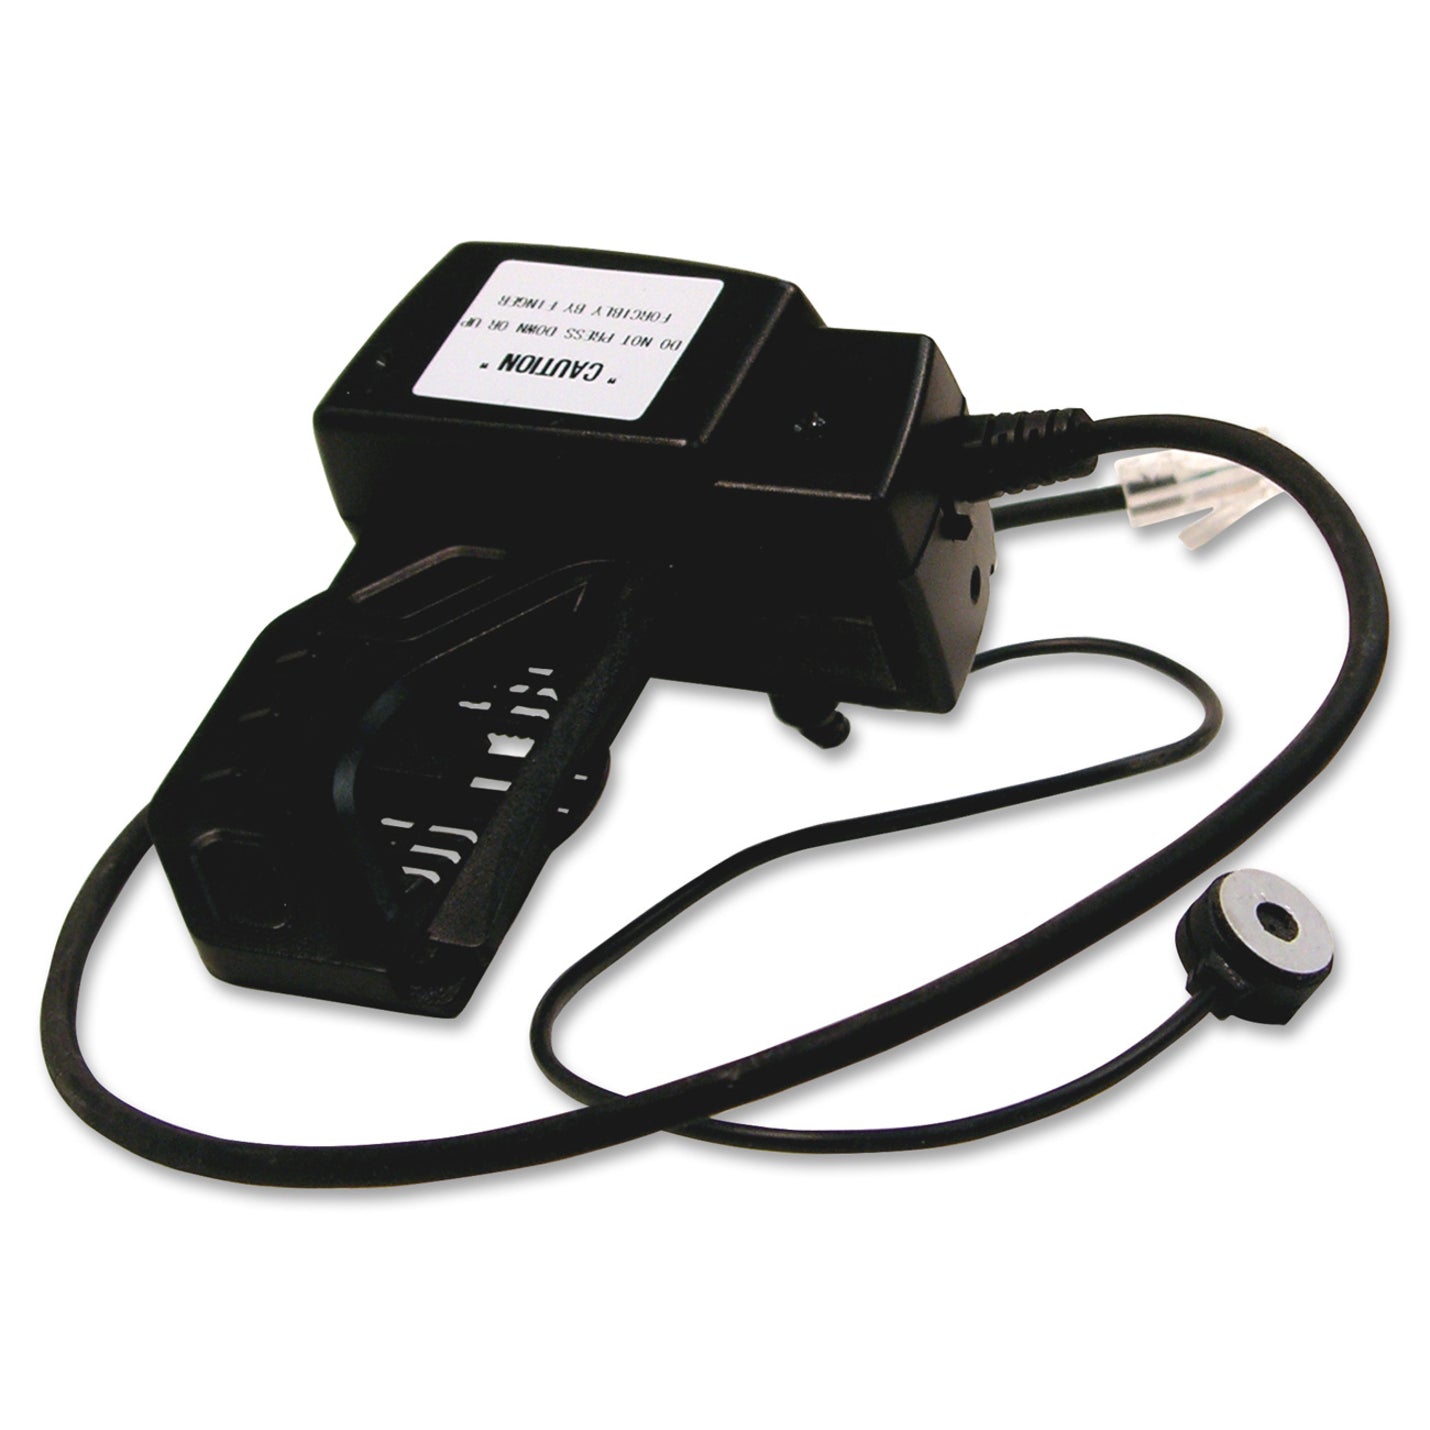 Spracht RHL-2010 Remote Handset Lifter for Spracht ZUM Headsets, Black/Silver